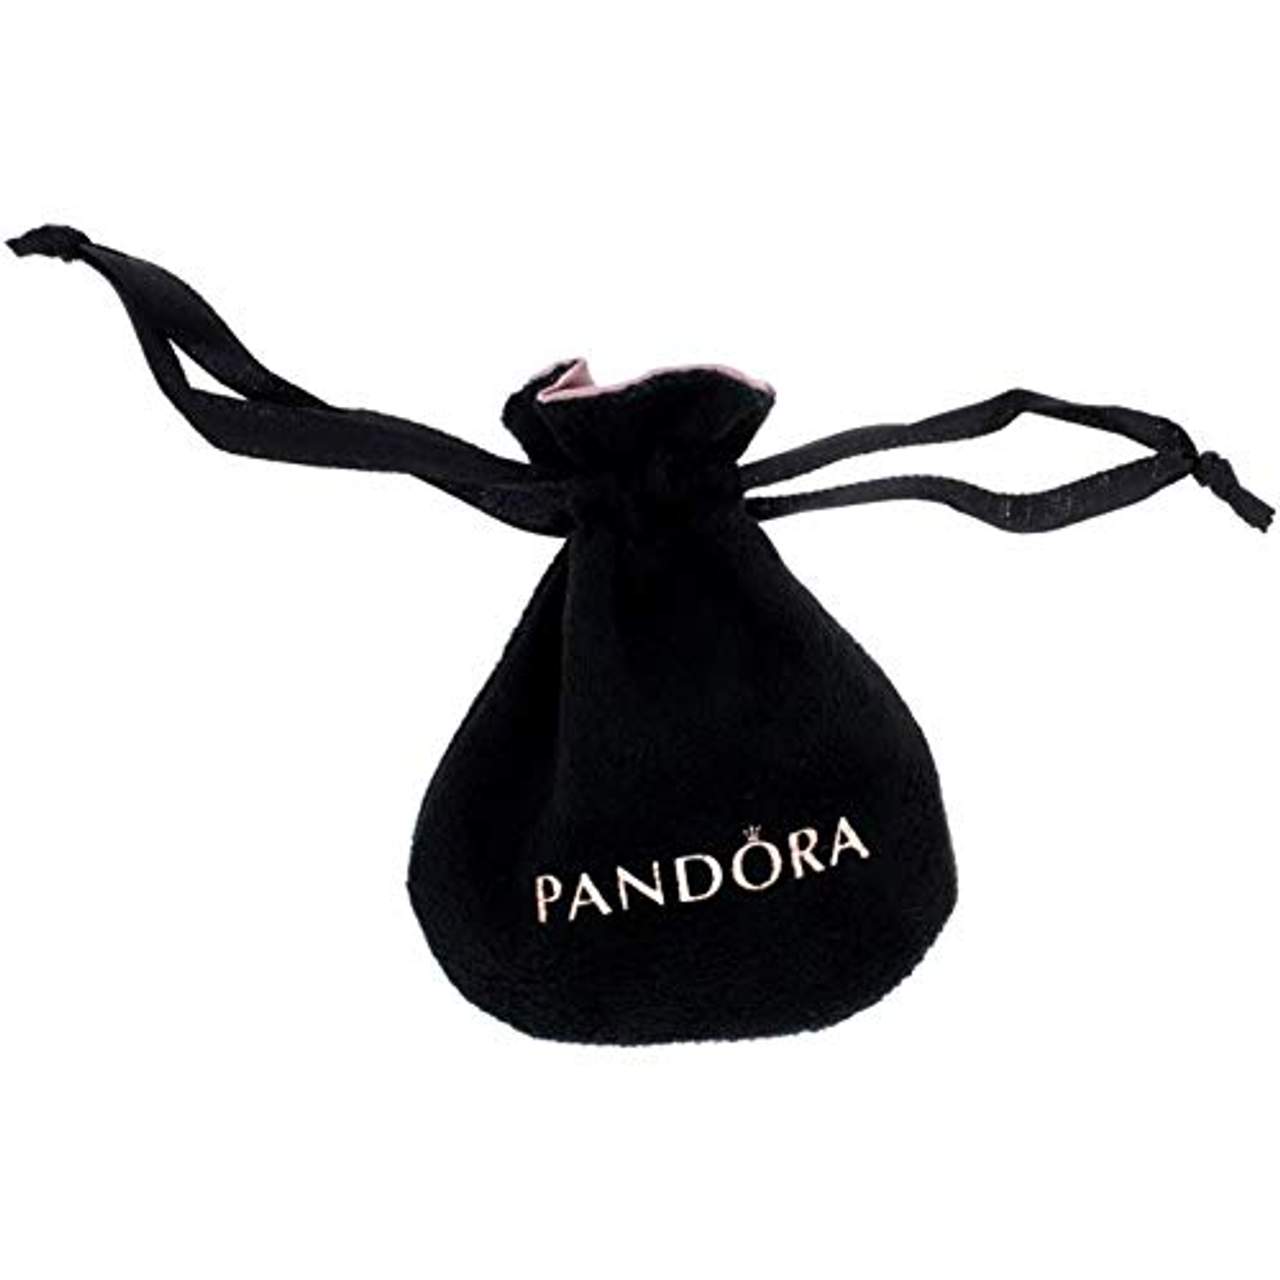 Pandora Damen-Charm 925 Silber Zirkonia weiß